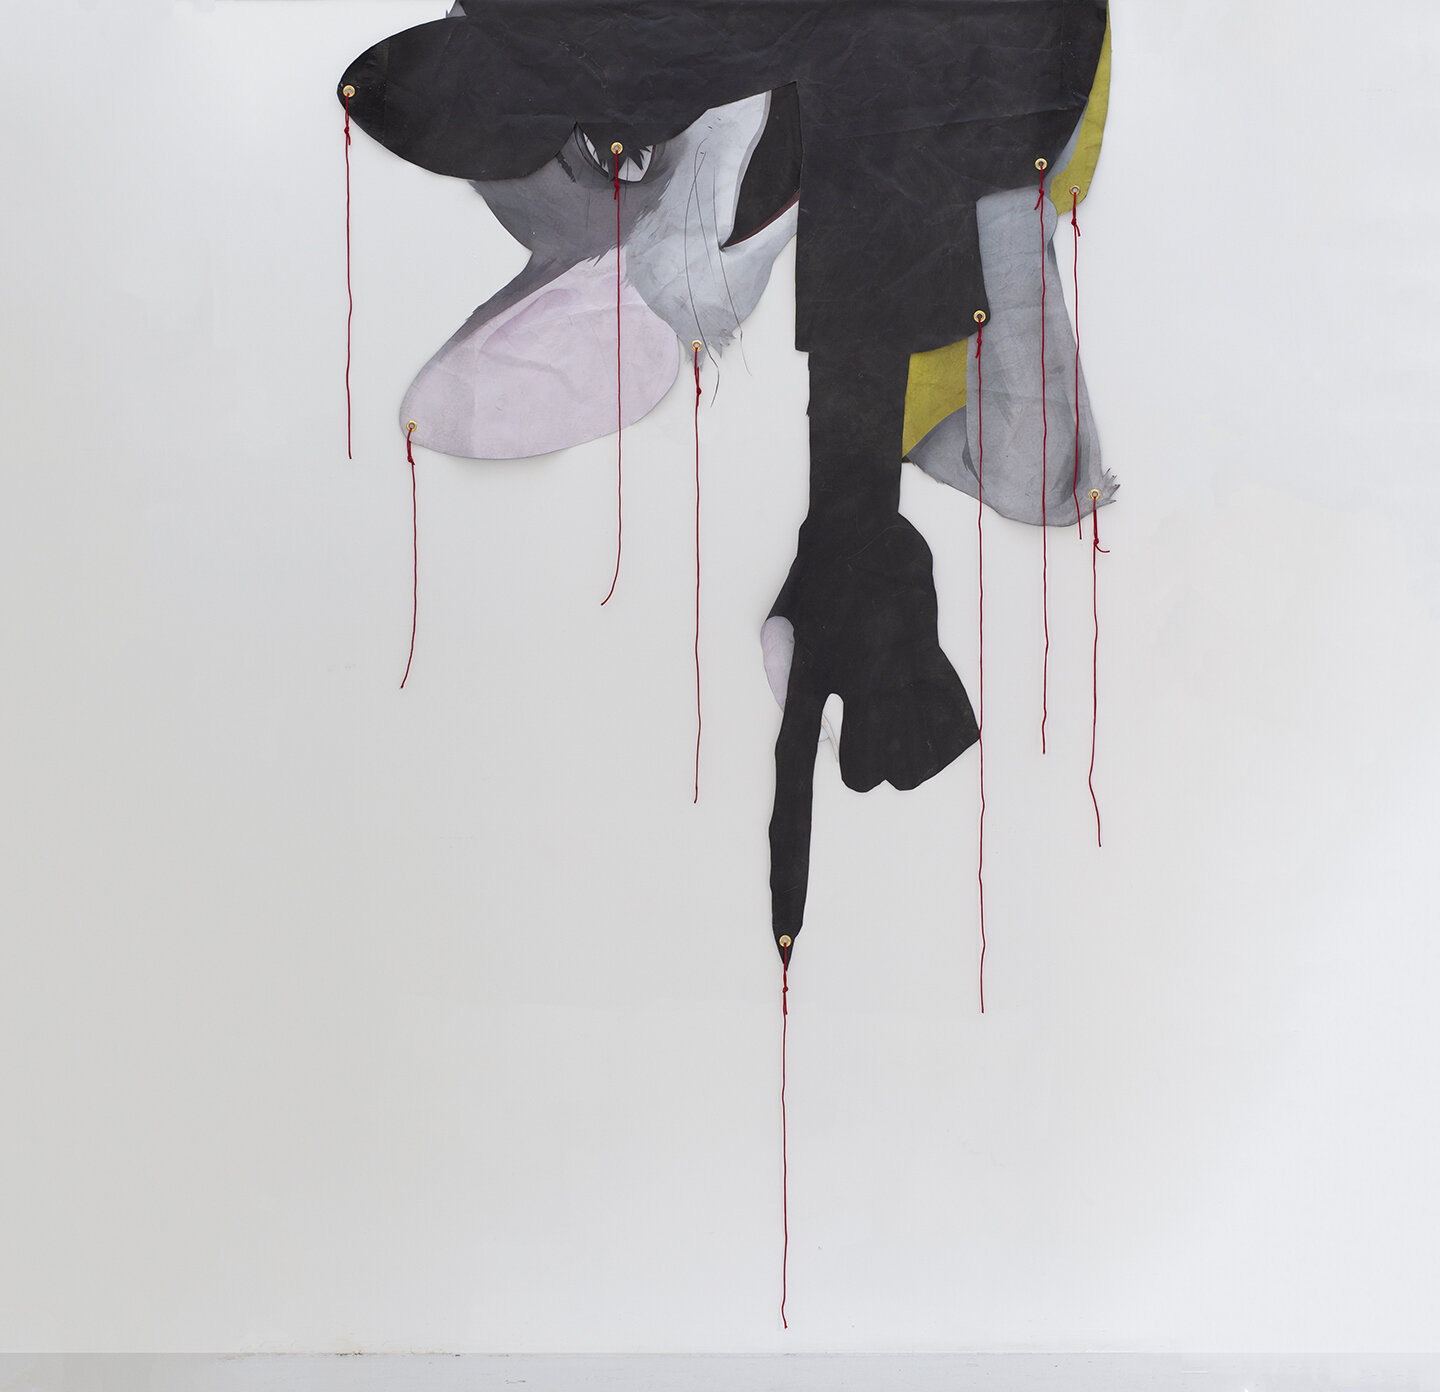  Jonathan Mildenberg  The Veil (Rikki) , 2020 printed vinyl, nylon cord, metal grommets 120 x 72 inches (305 x 193 cm)  JM9 